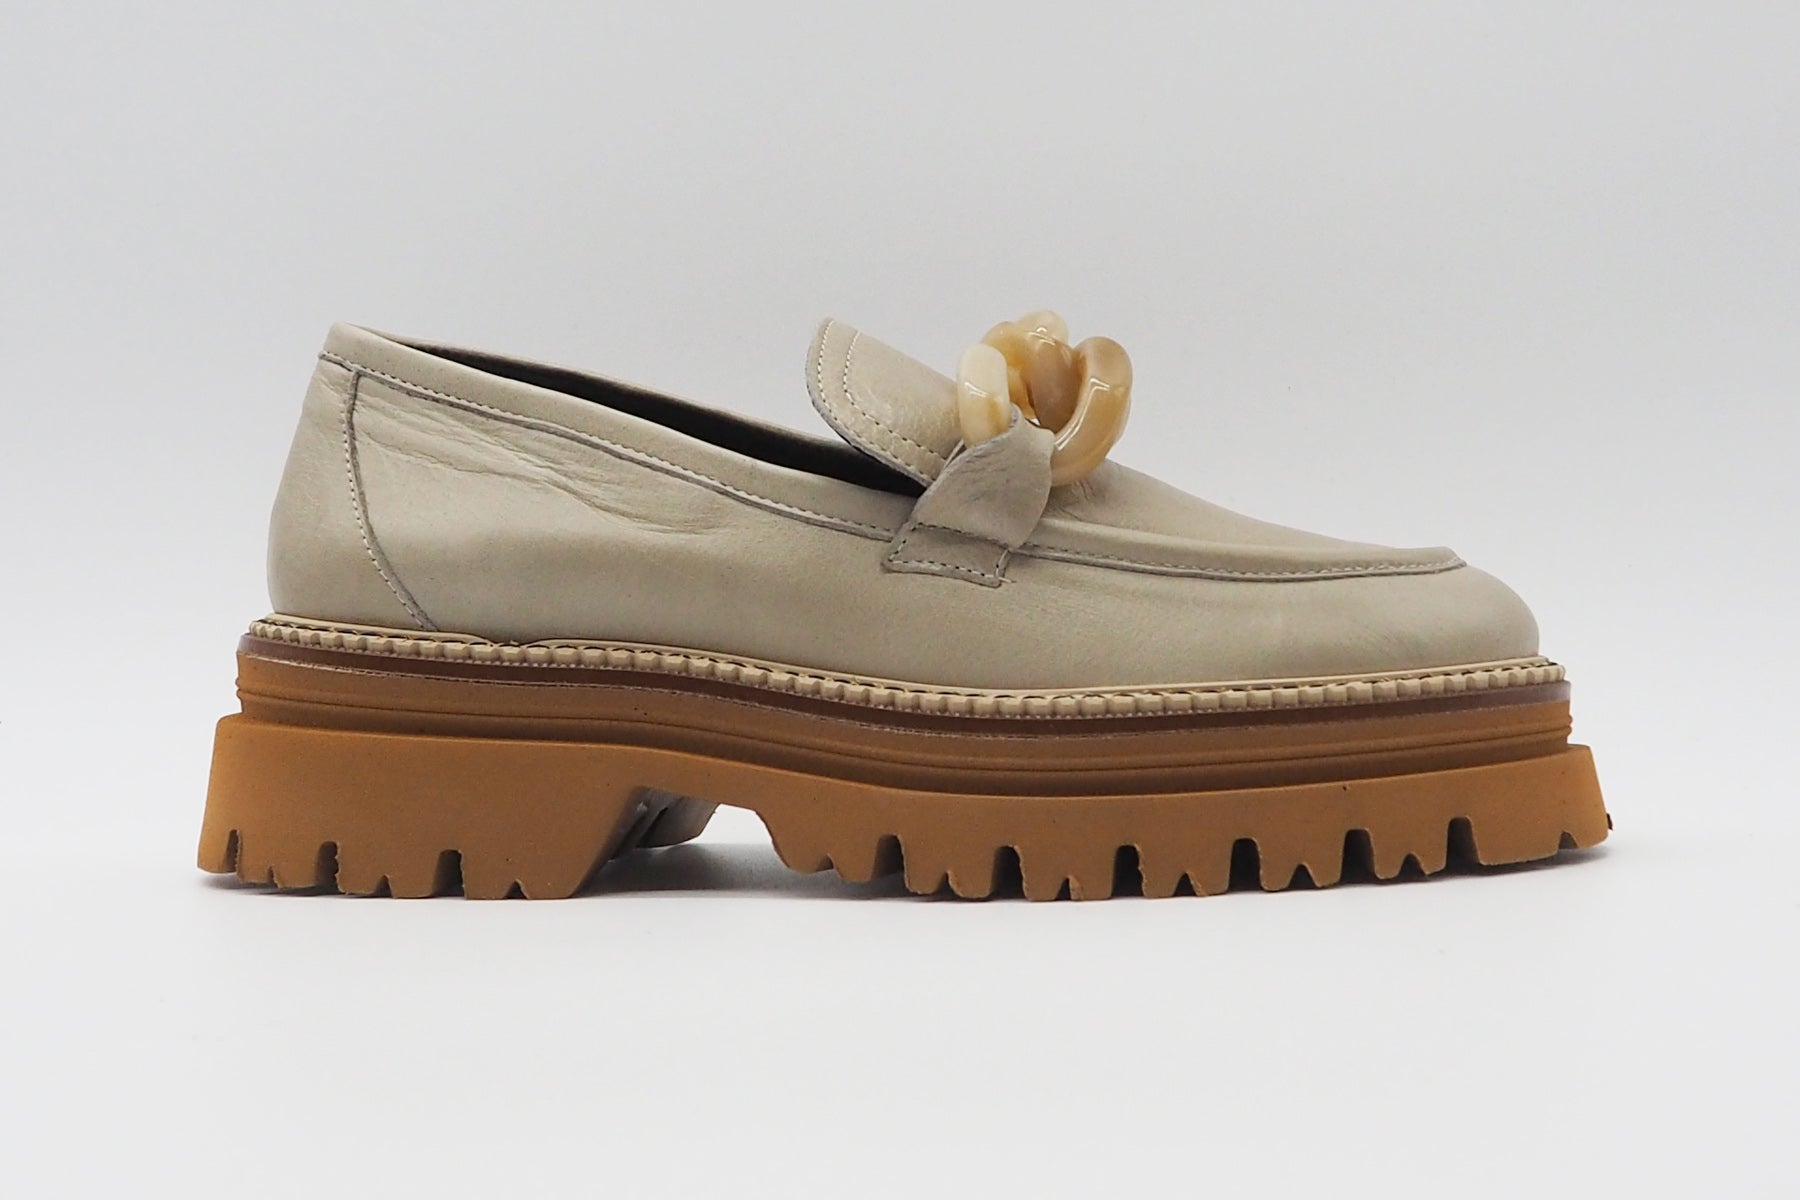 Damen Loafer aus Leder in Beige - Absatz 5cm Damen Loafers & Schnürer Maripé